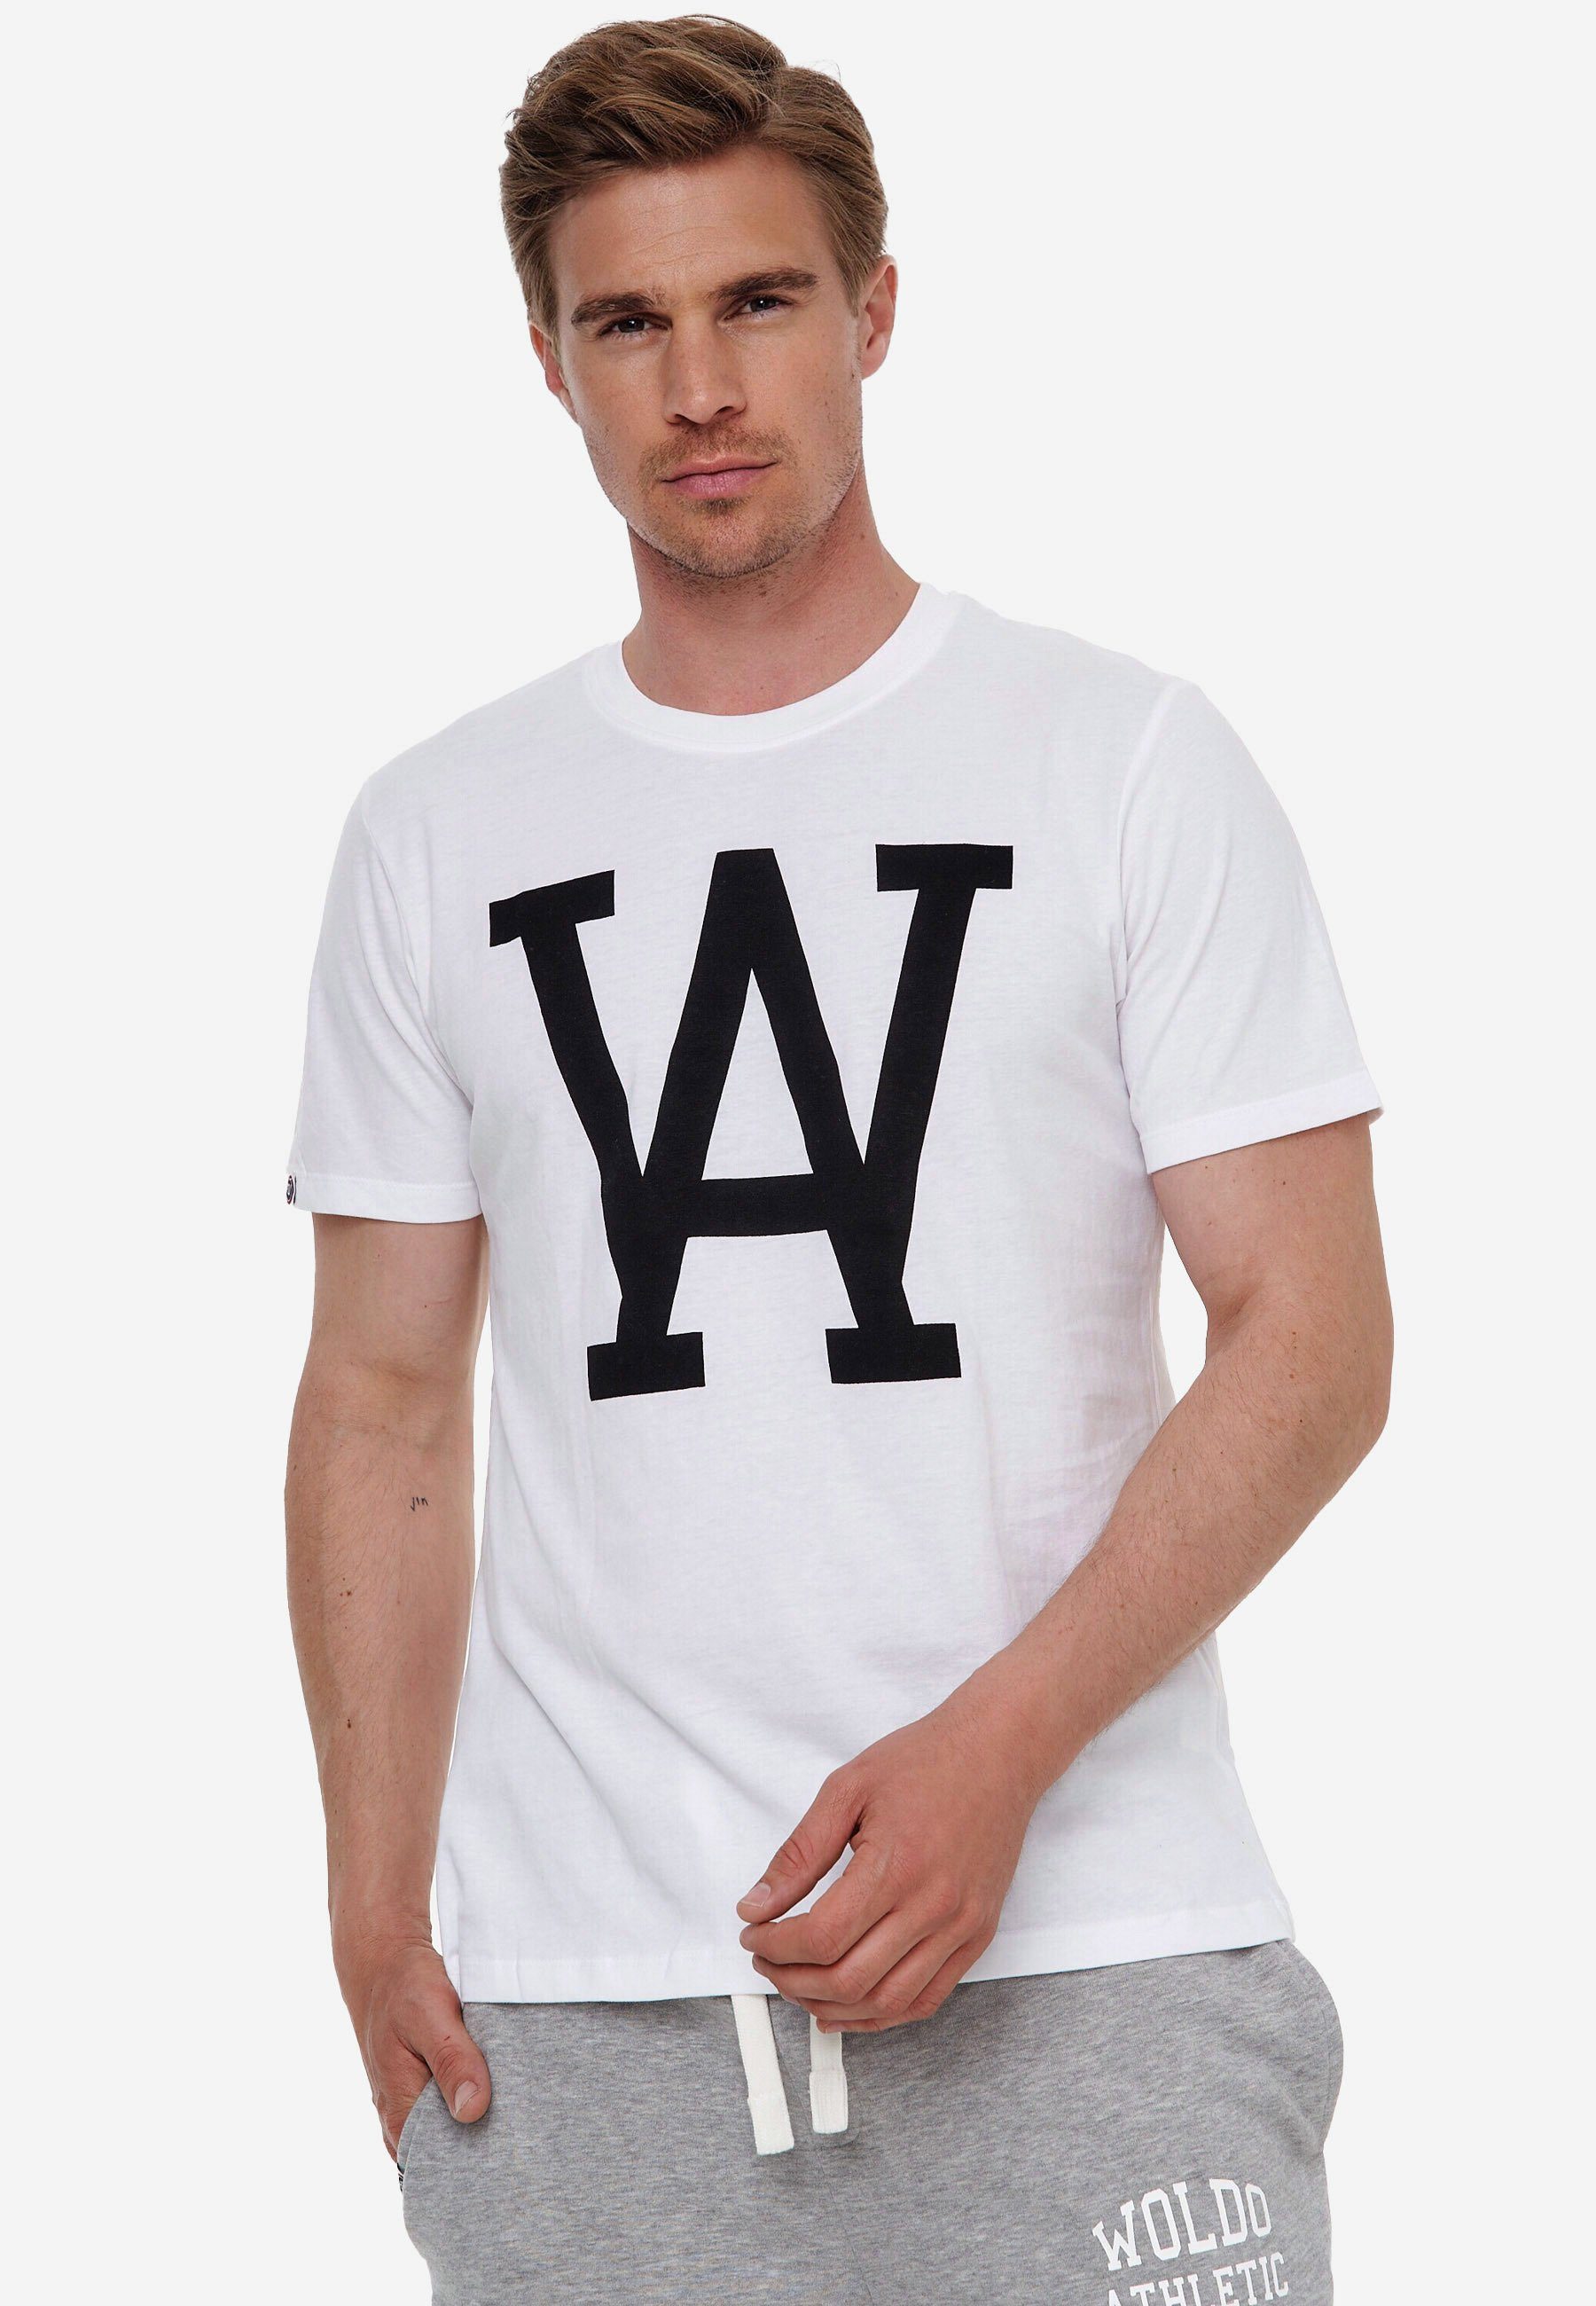 Woldo Athletic T-Shirt T-Shirt Big WA weiß-schwarz